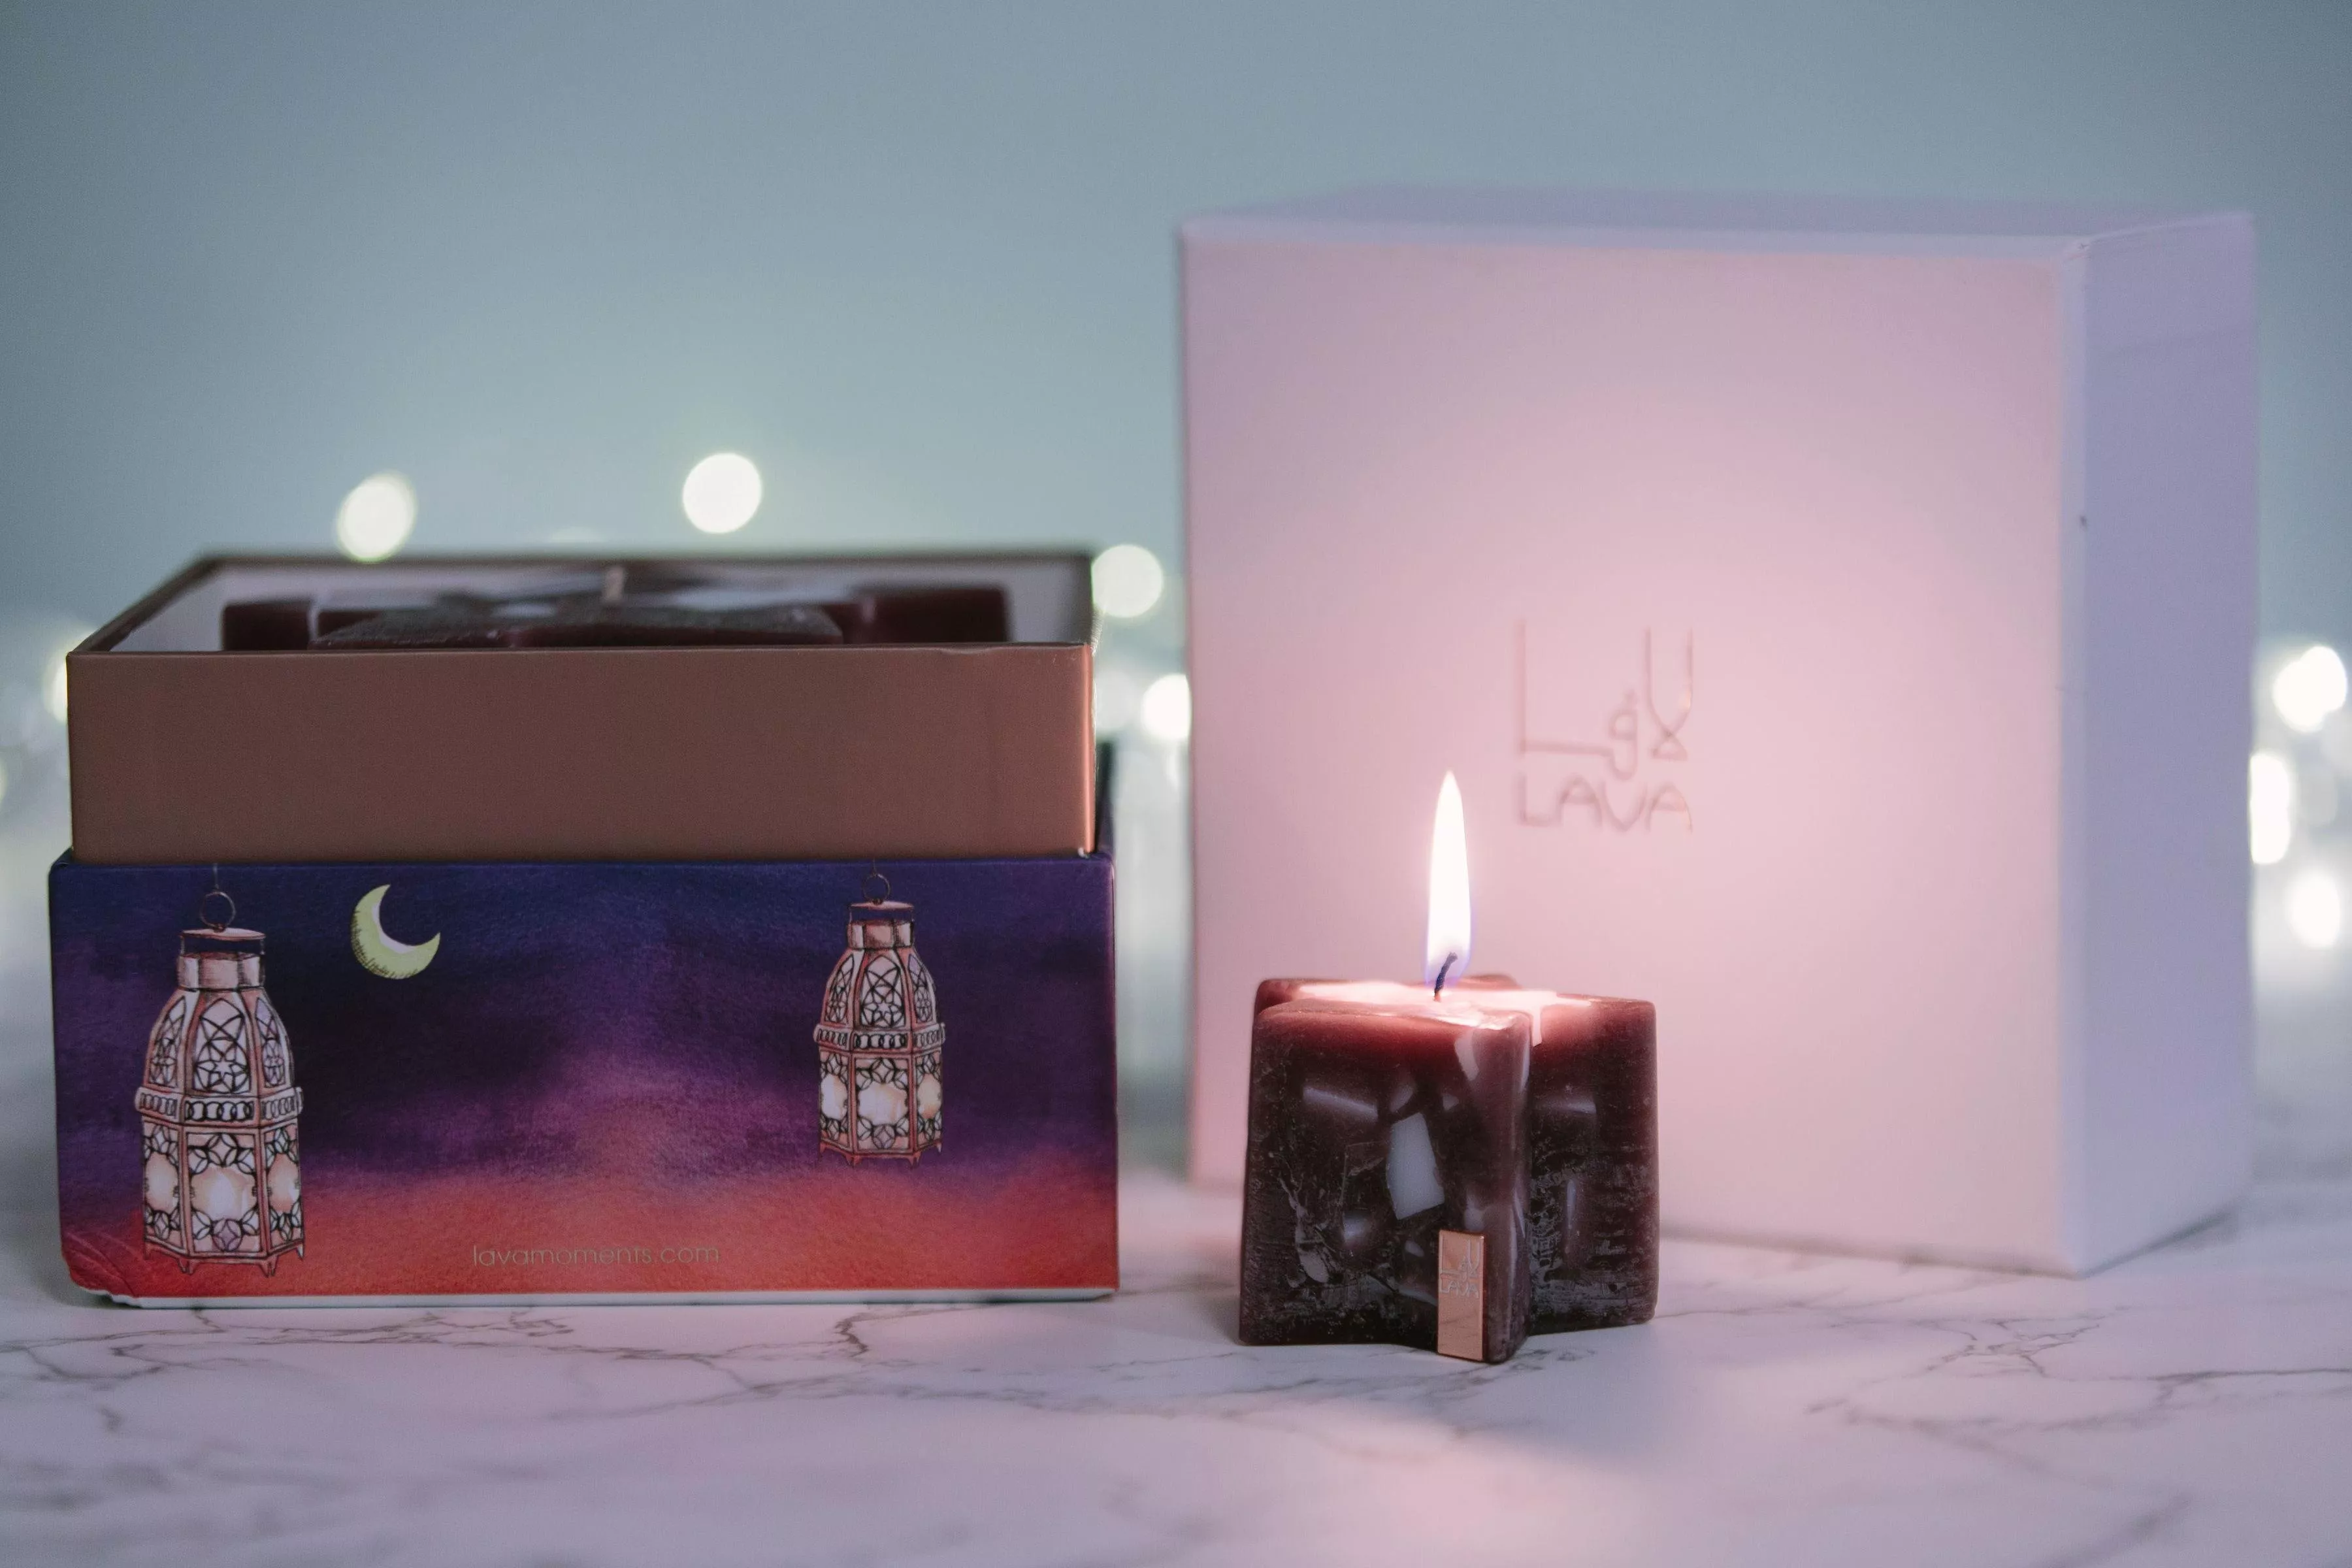 Lava تطلق شمعتين جديدتين بمناسبة شهر رمضان